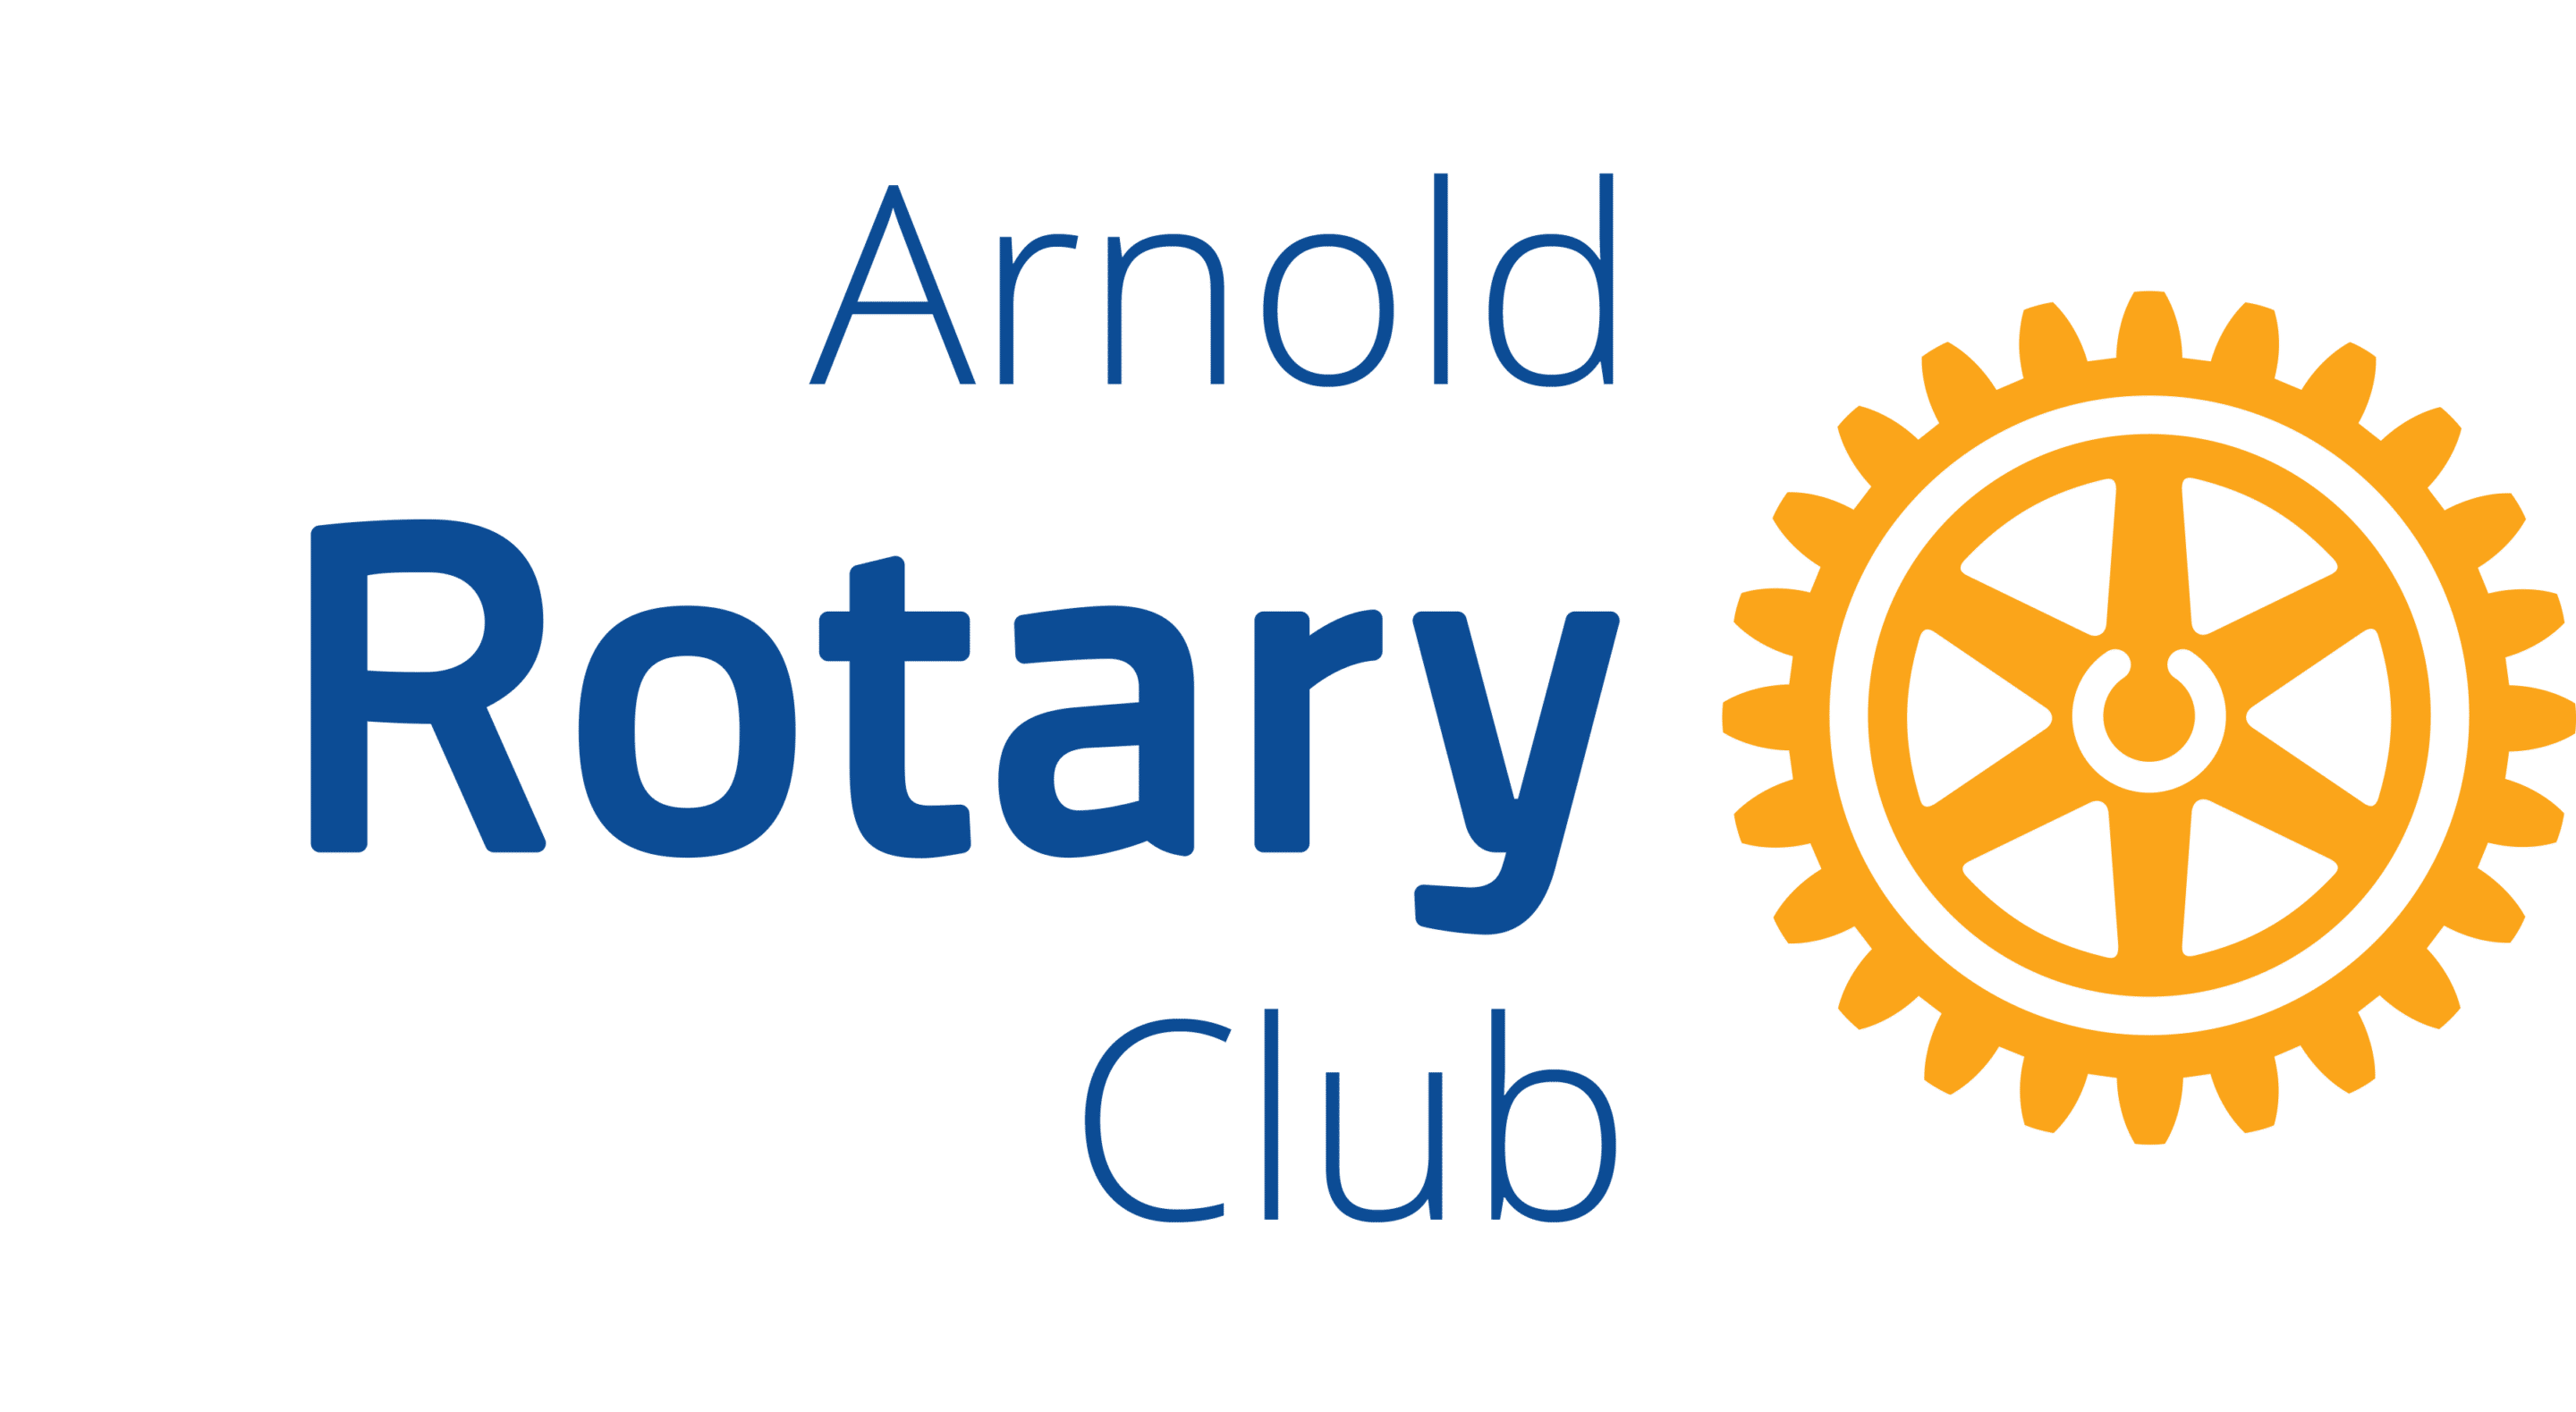 Arnold Rotary